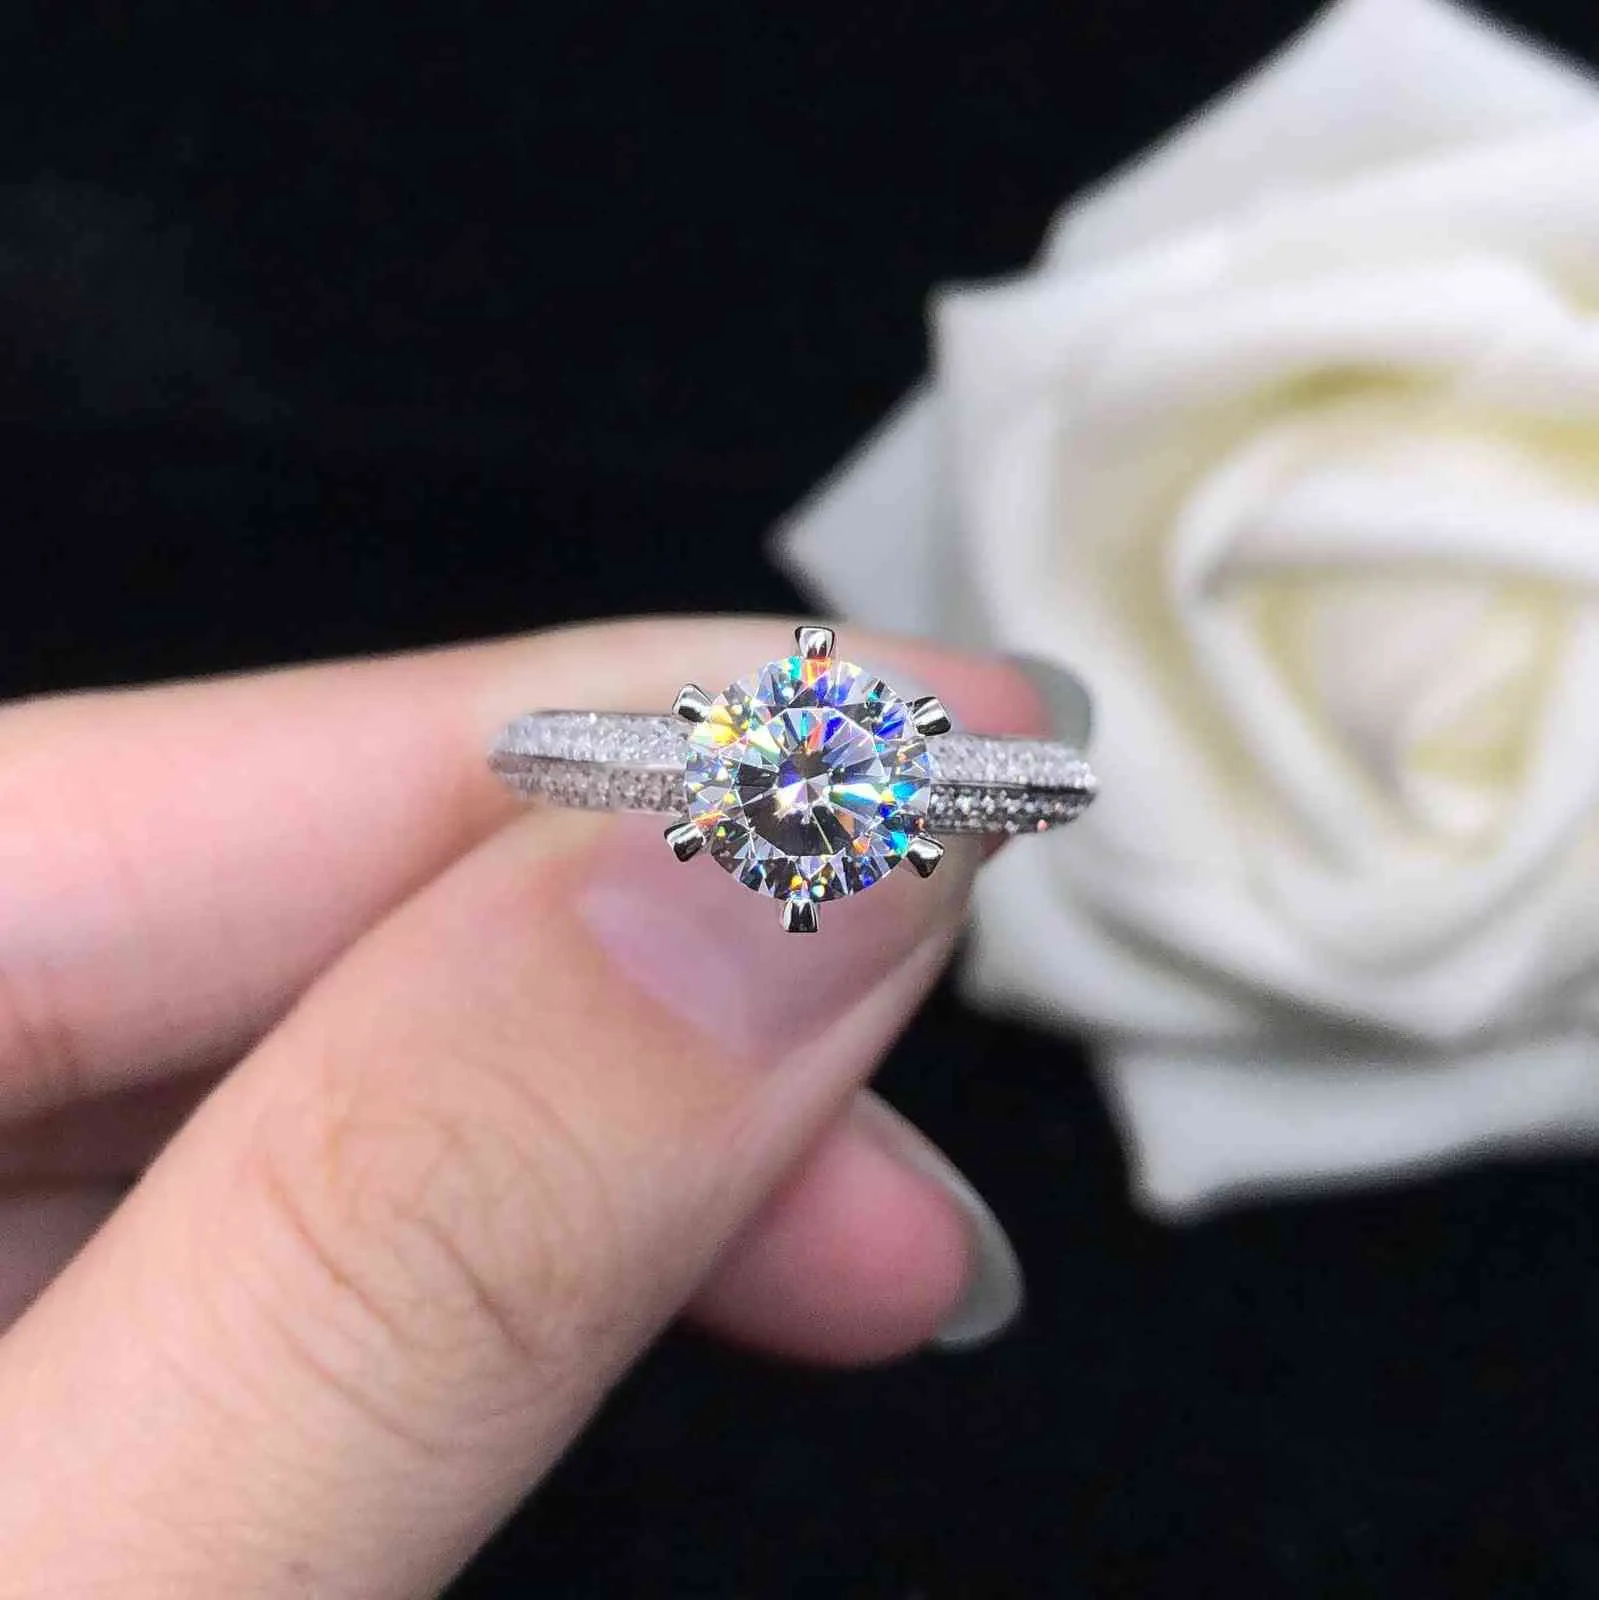 Fantastic 15ct Round Cut Diamond Ring for Women Wedding Jewelry Solid Platinum 950 R1096665936